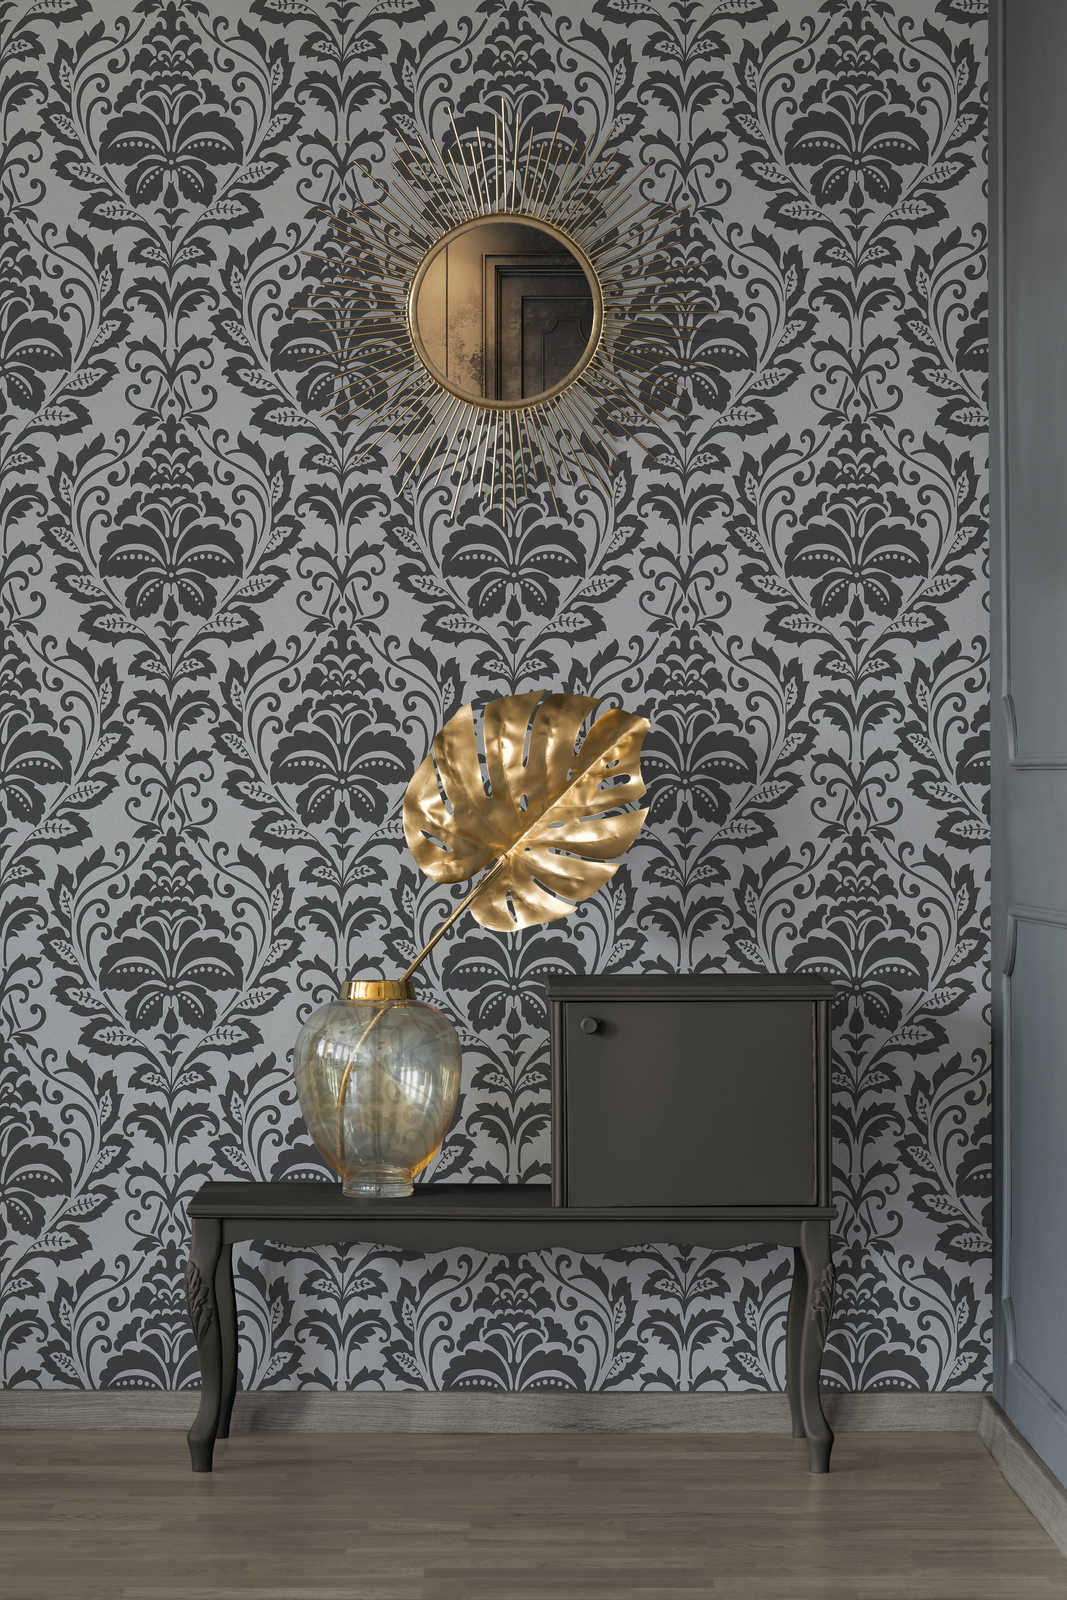             Neo-Klassik Ornament Tapete, floral – Grau, Schwarz
        